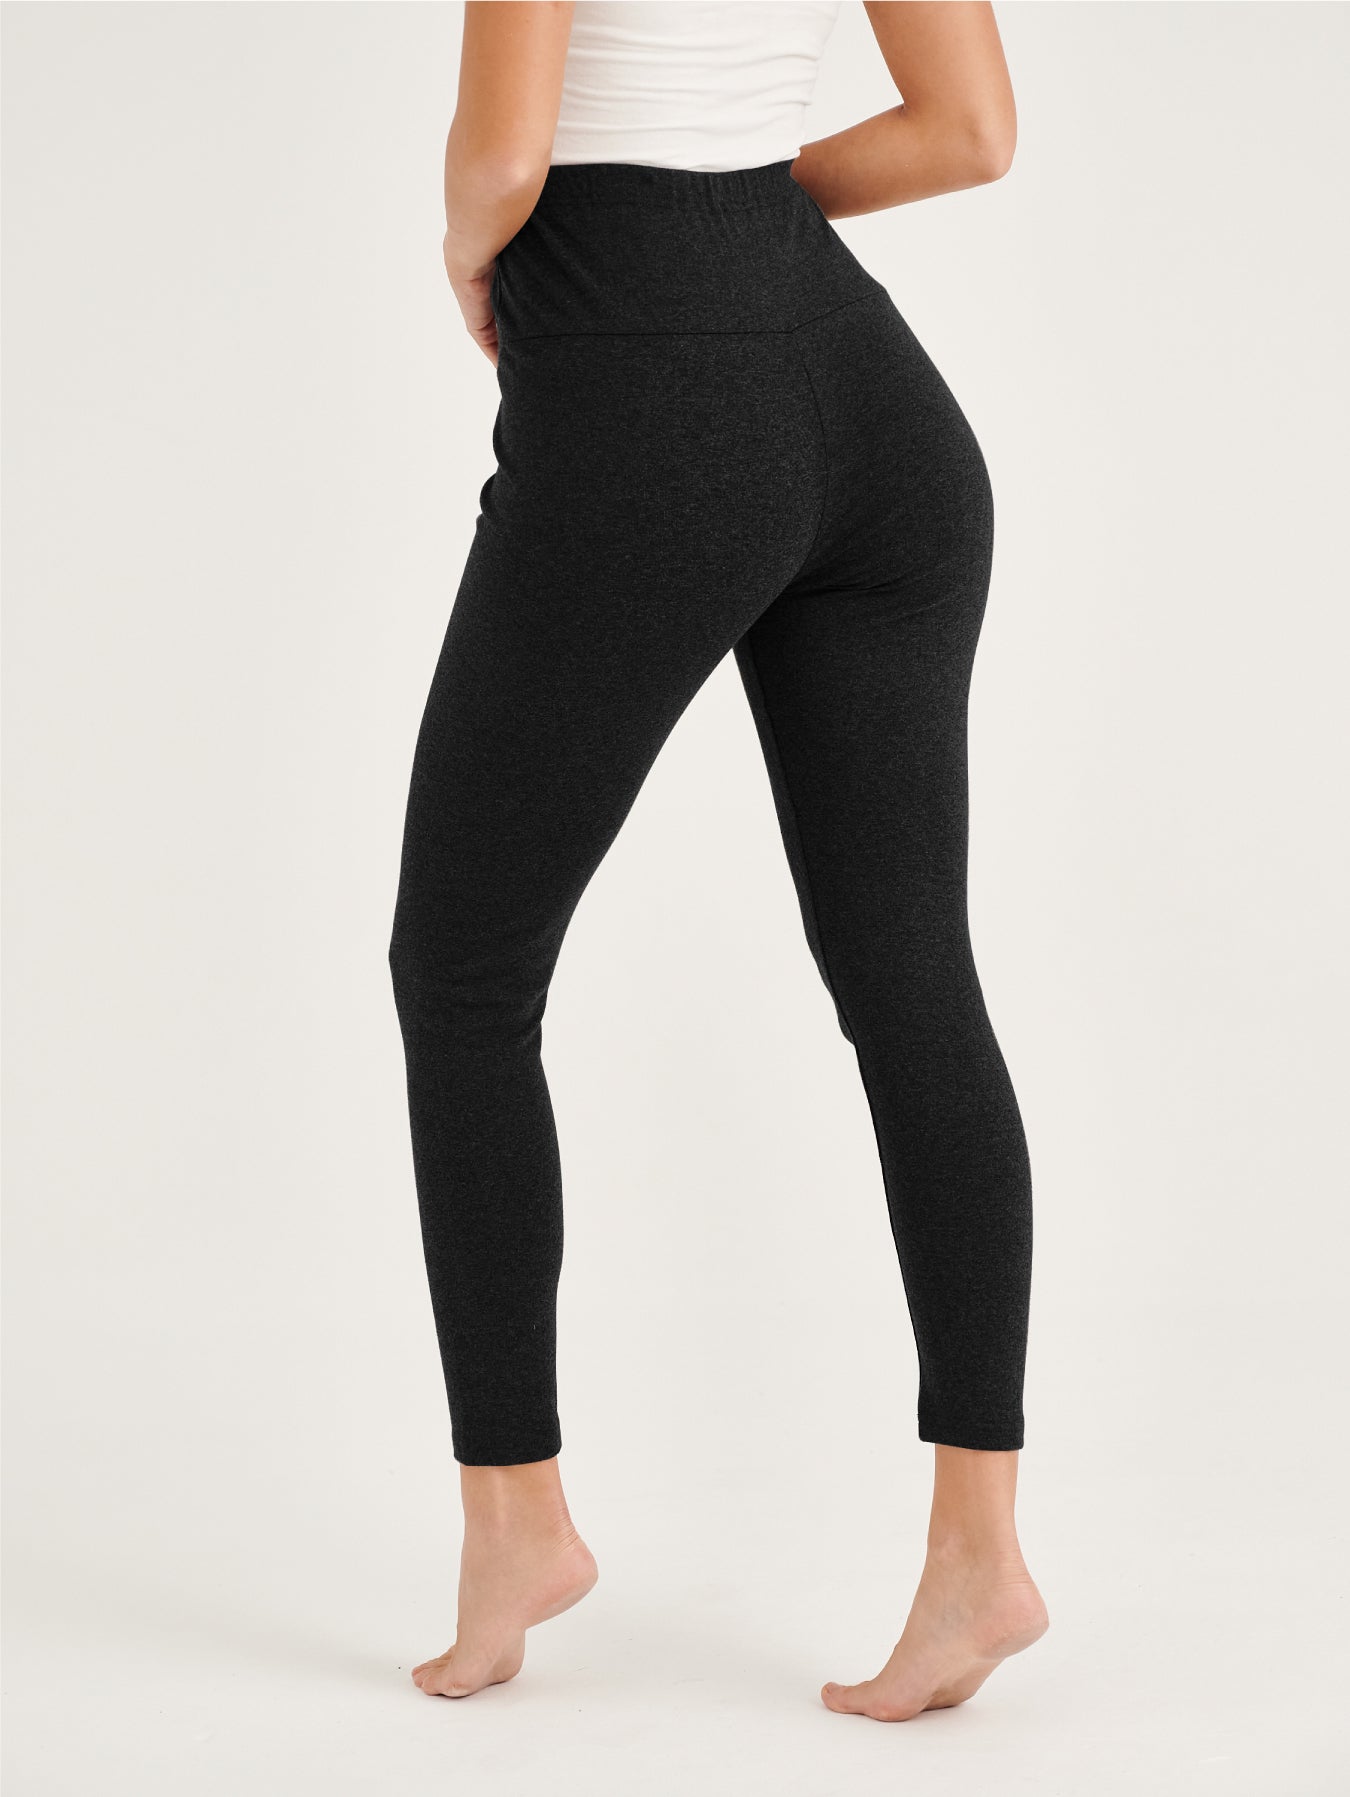 Black slim fit maternity leggings with high waist